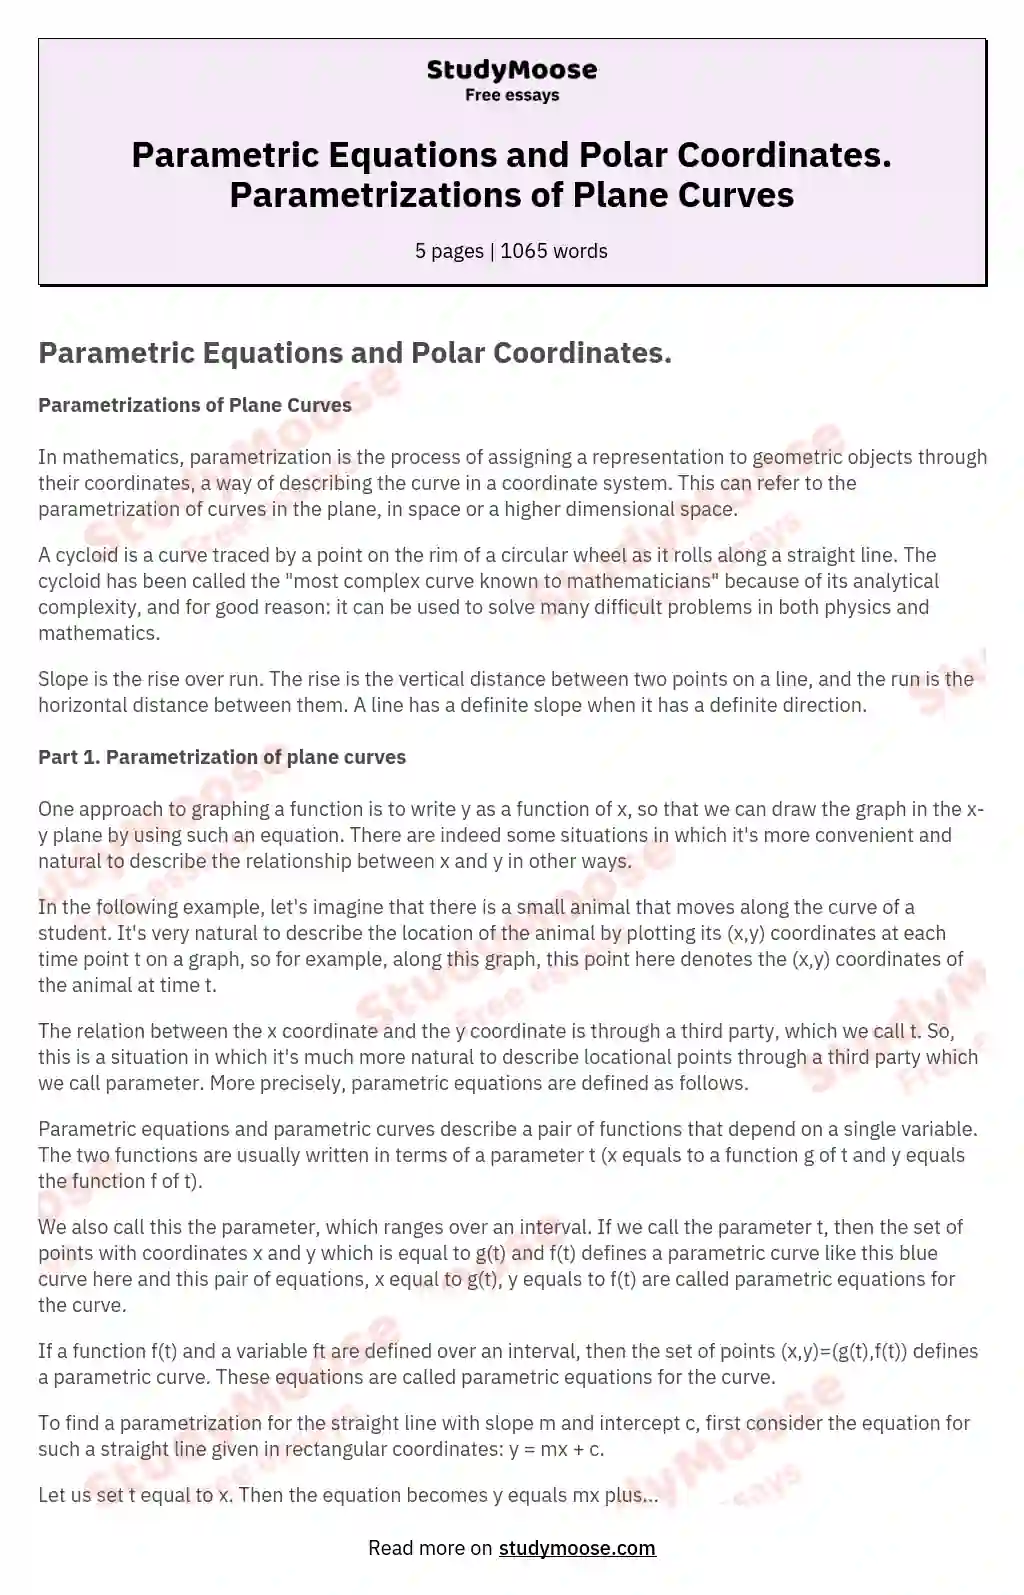 Parametric Equations and Polar Coordinates. Parametrizations of Plane Curves essay